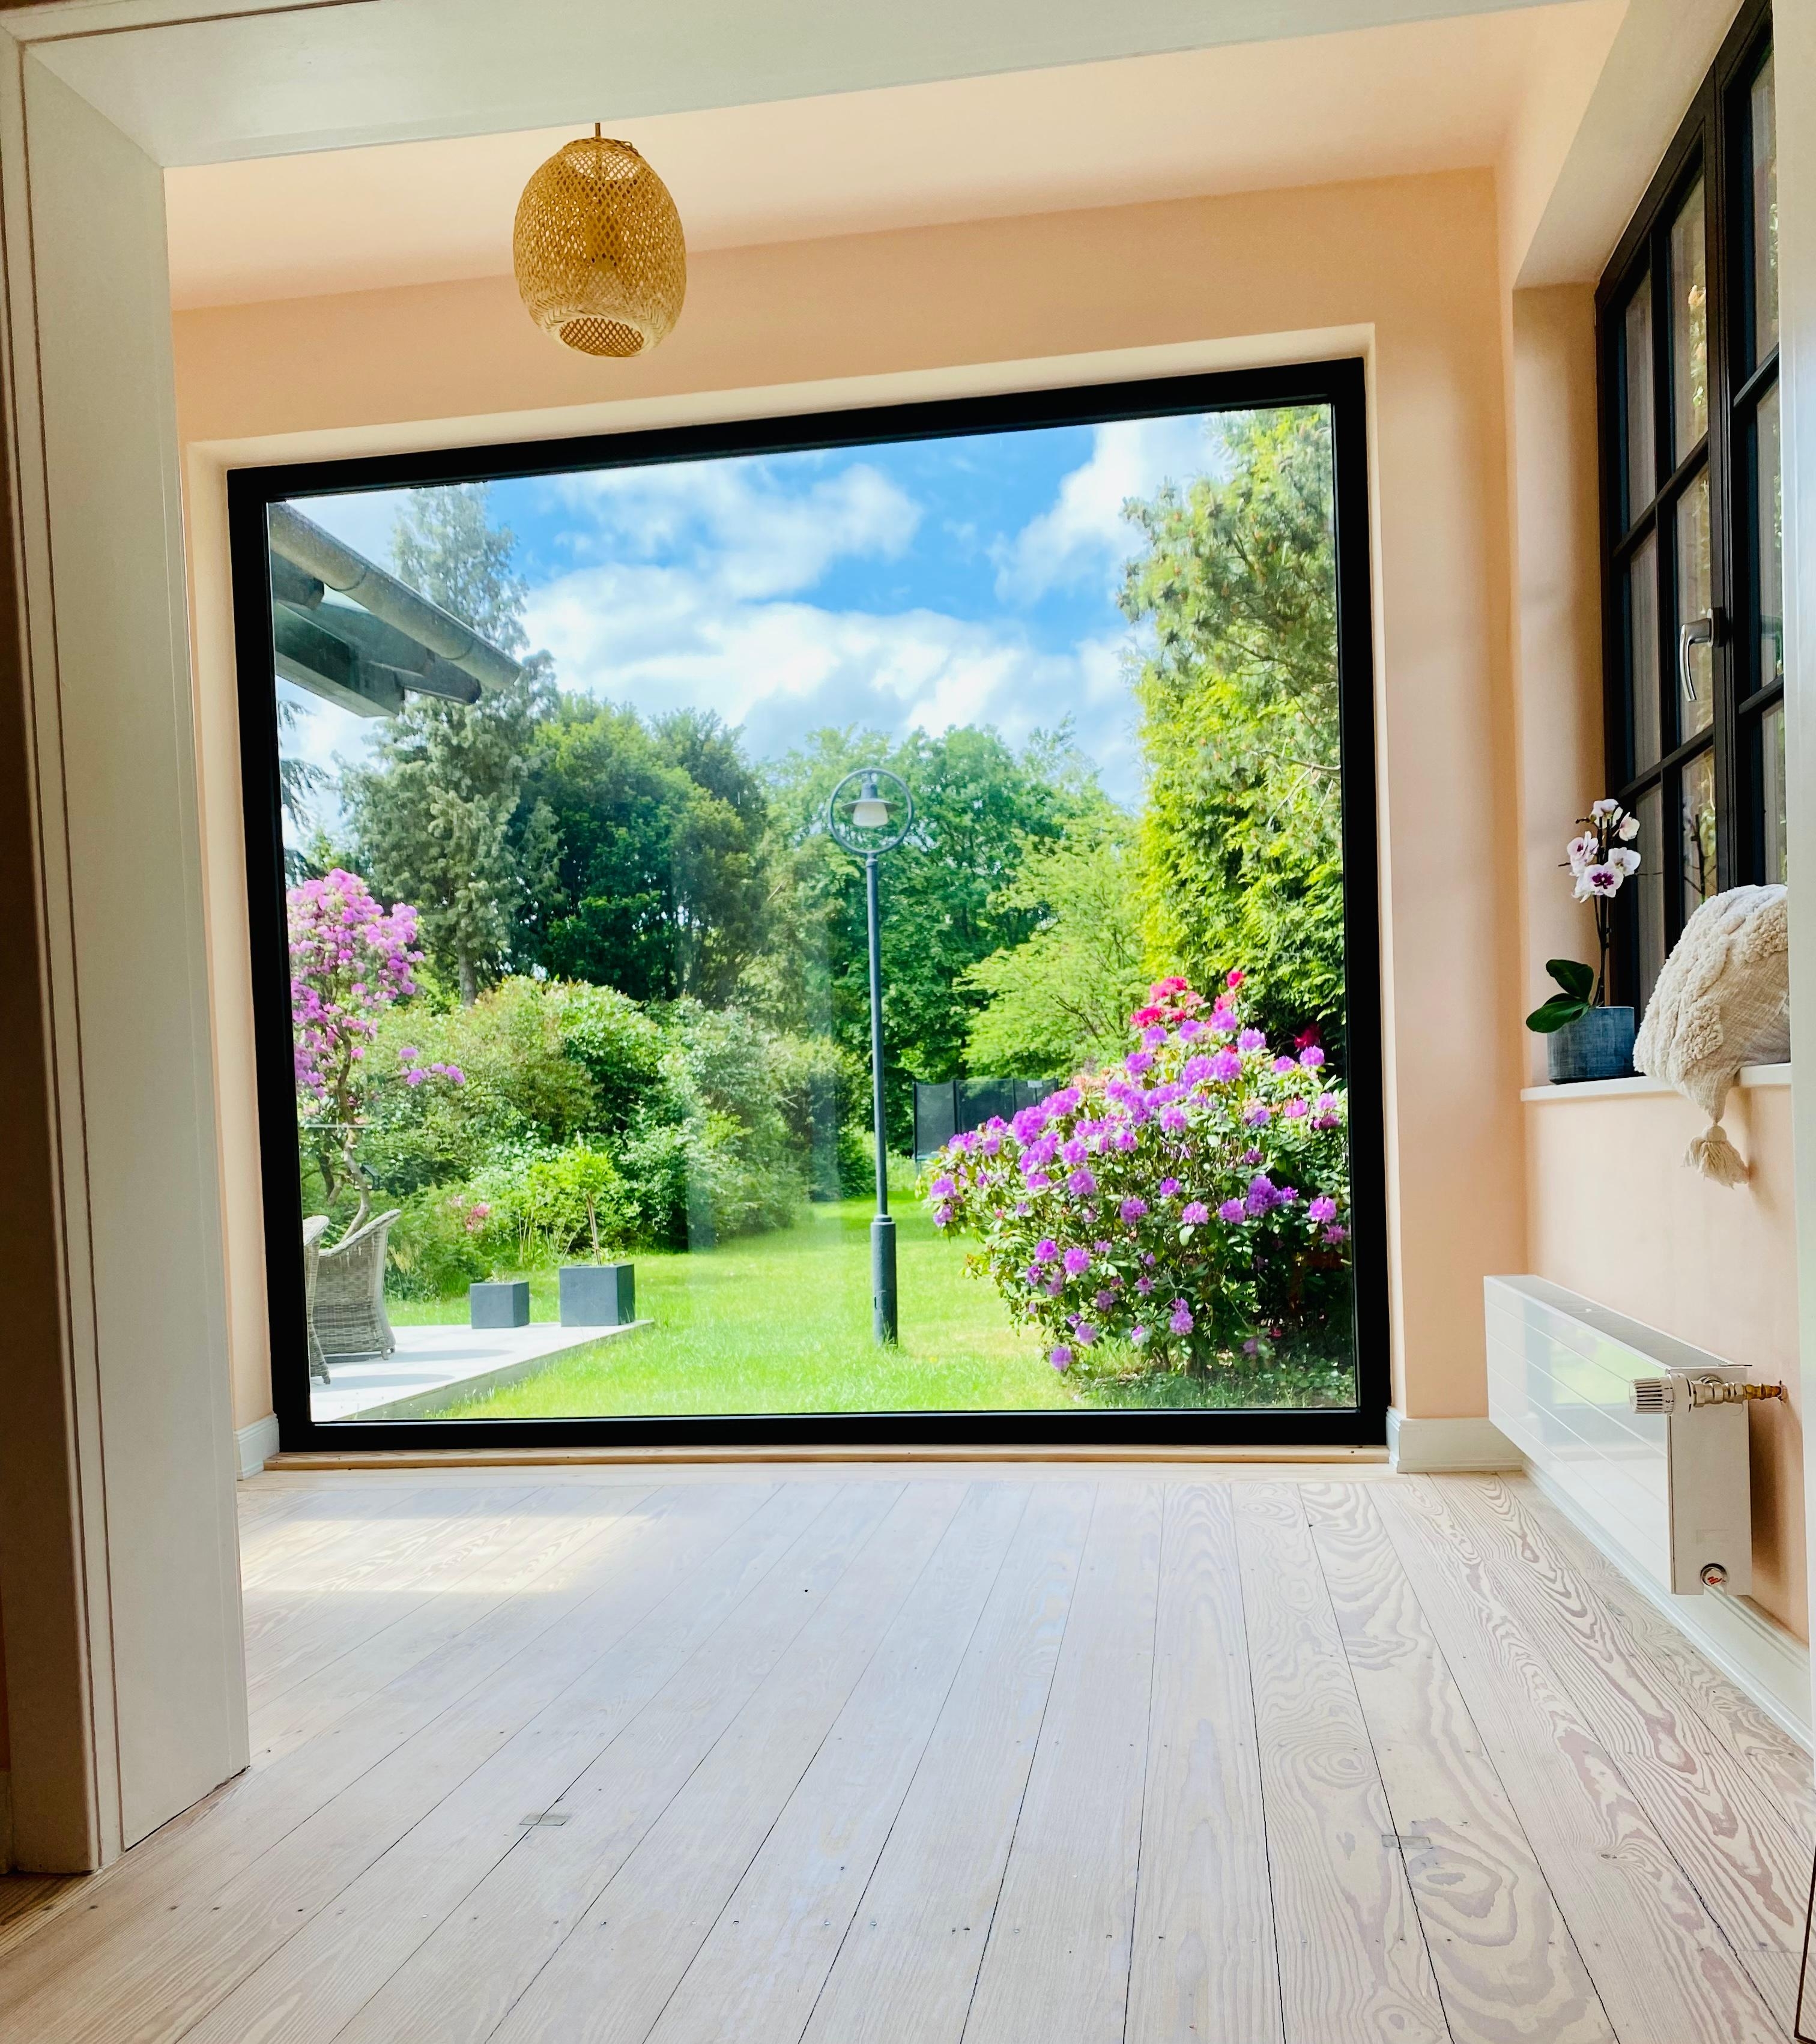 Beste Idee: bodentiefes Fenster mit freien Blick in den Garten 

#panoramafenster #gartenblick #scandistyle